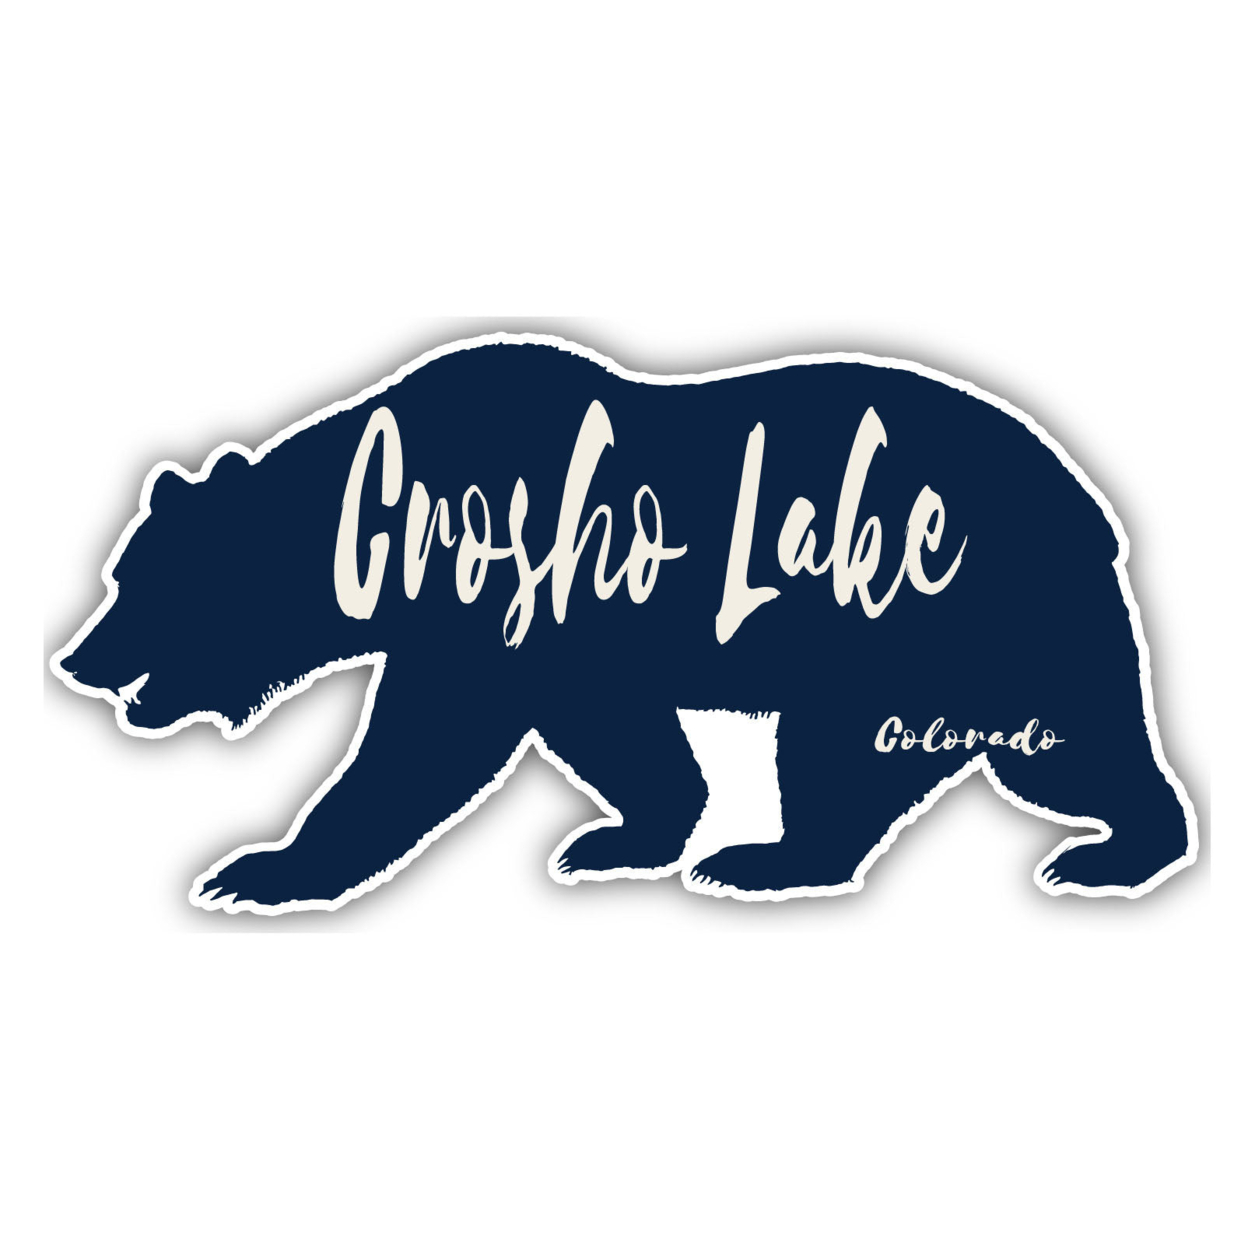 Crosho Lake Colorado Souvenir Decorative Stickers (Choose Theme And Size) - 4-Pack, 4-Inch, Bear